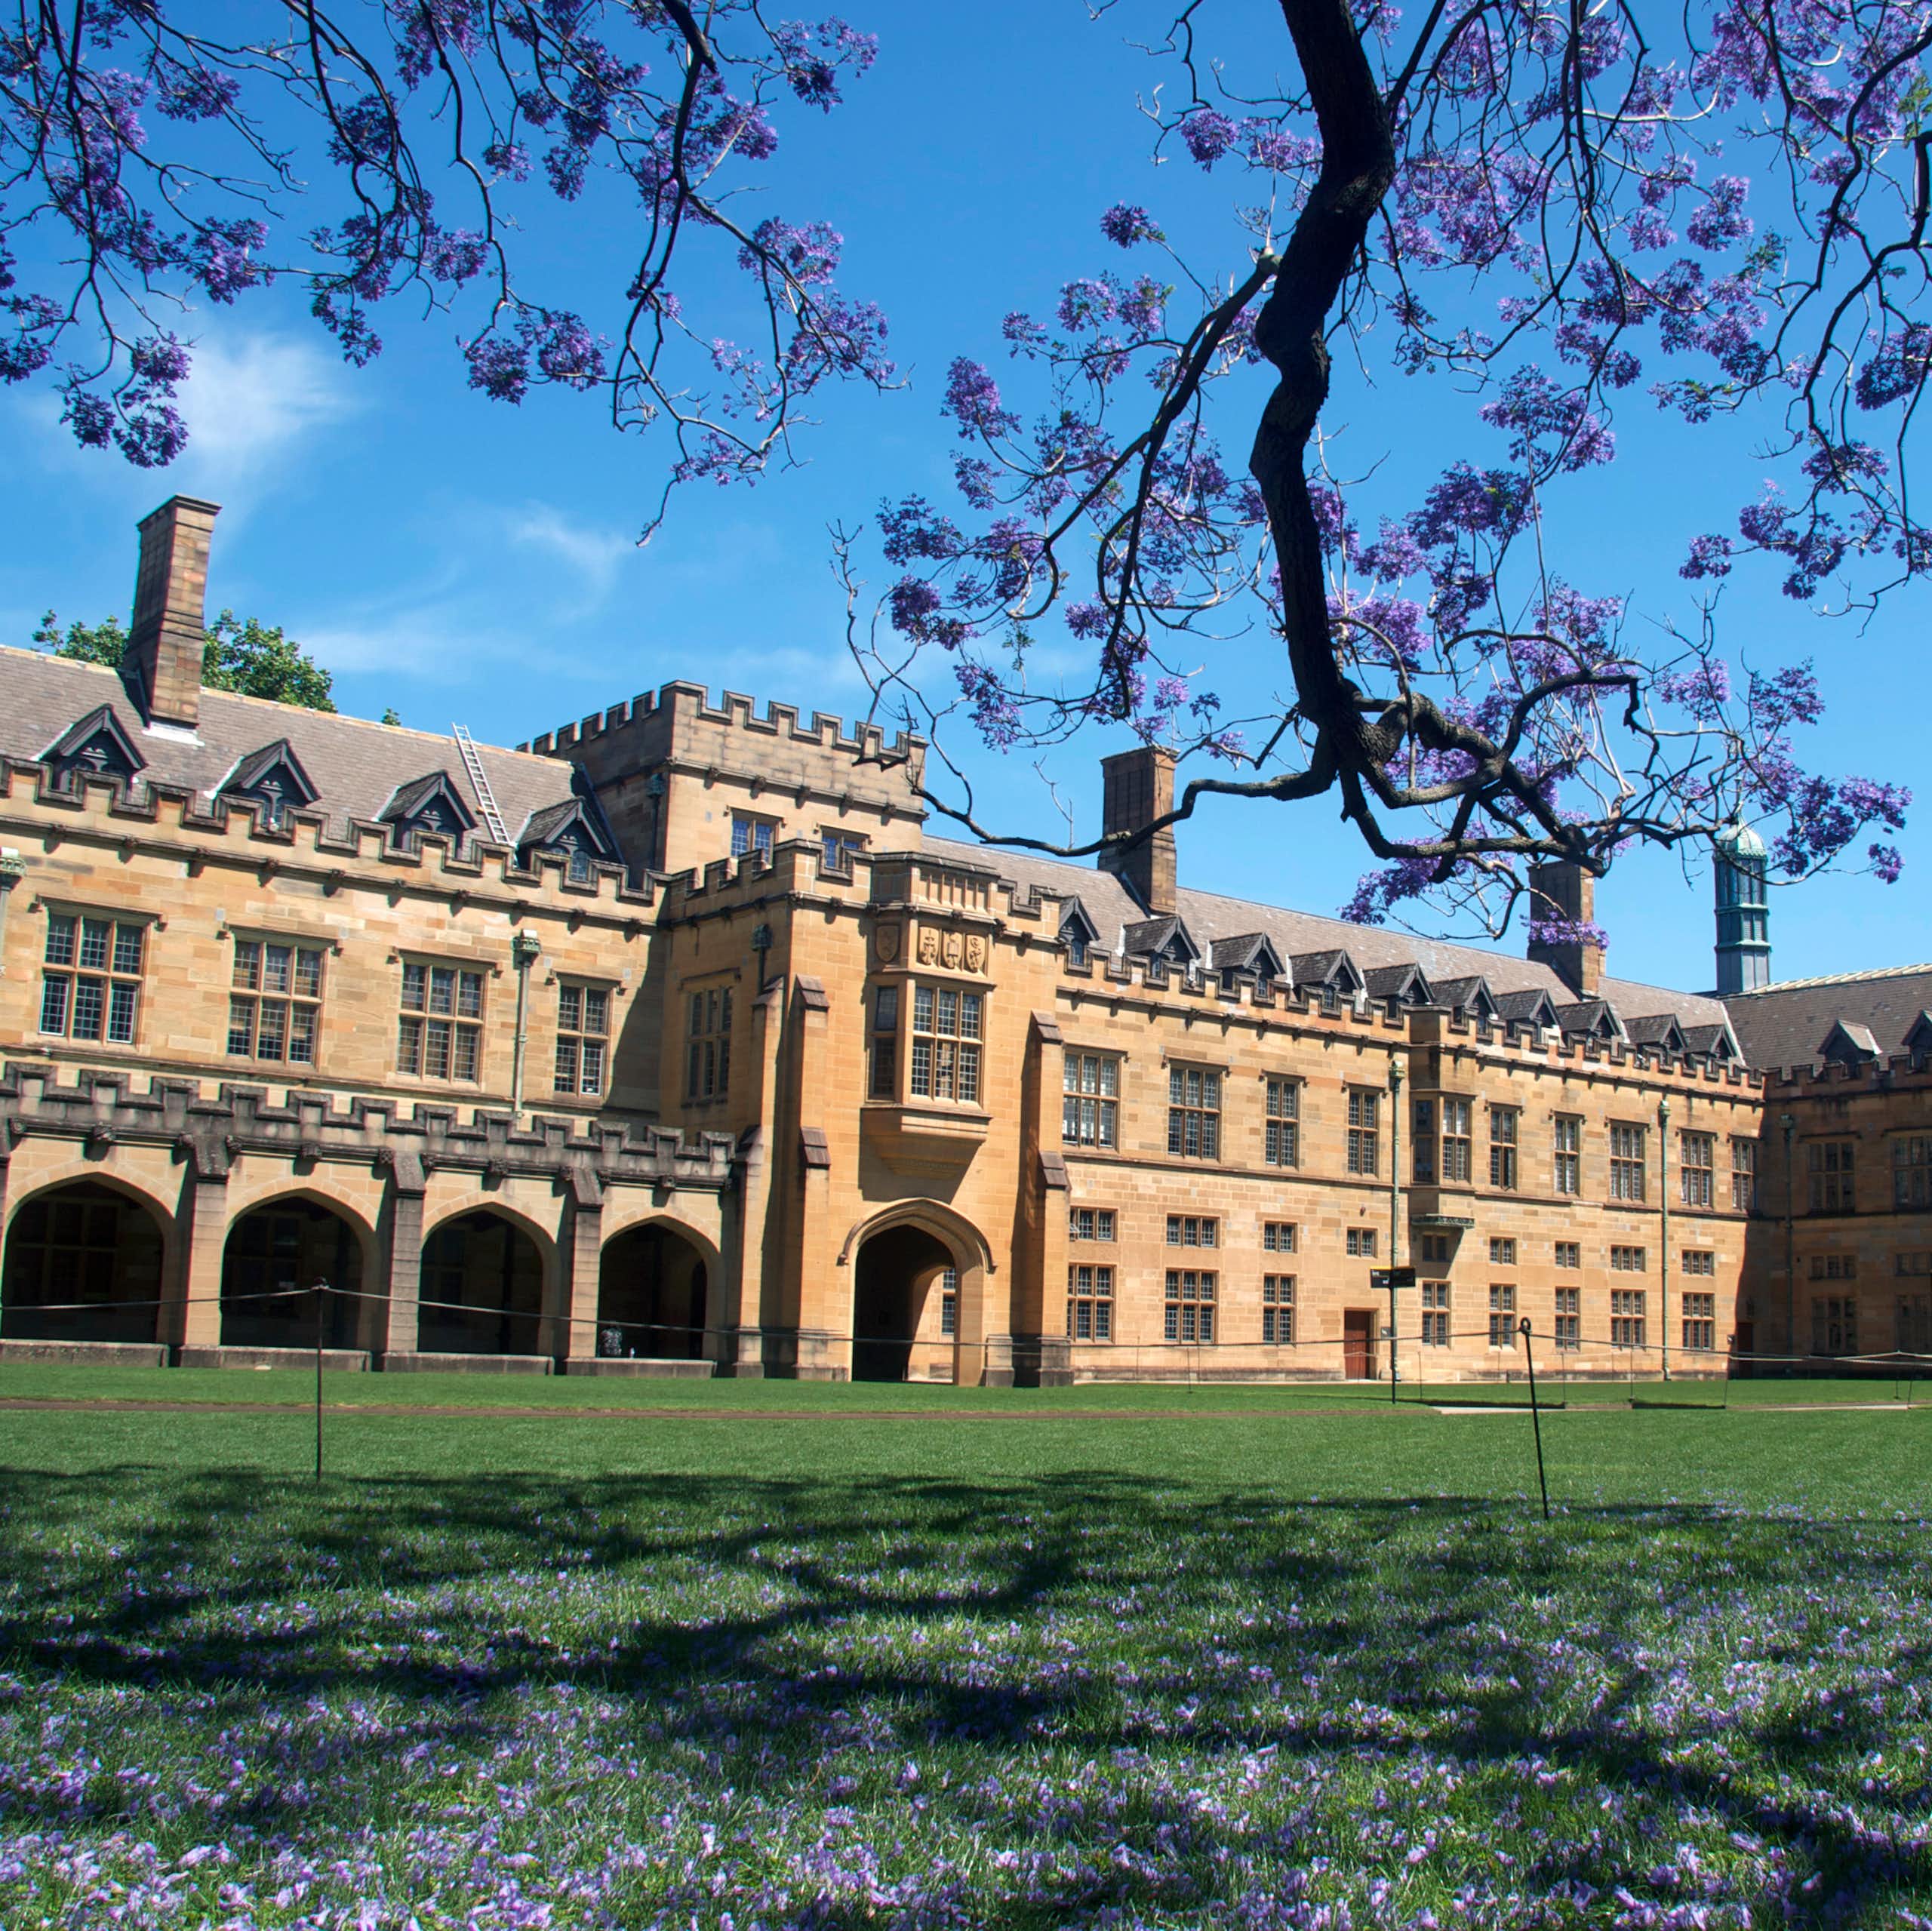 The main quadrangle at Sydney University, with sandstone buildings and a jacaranda tree.